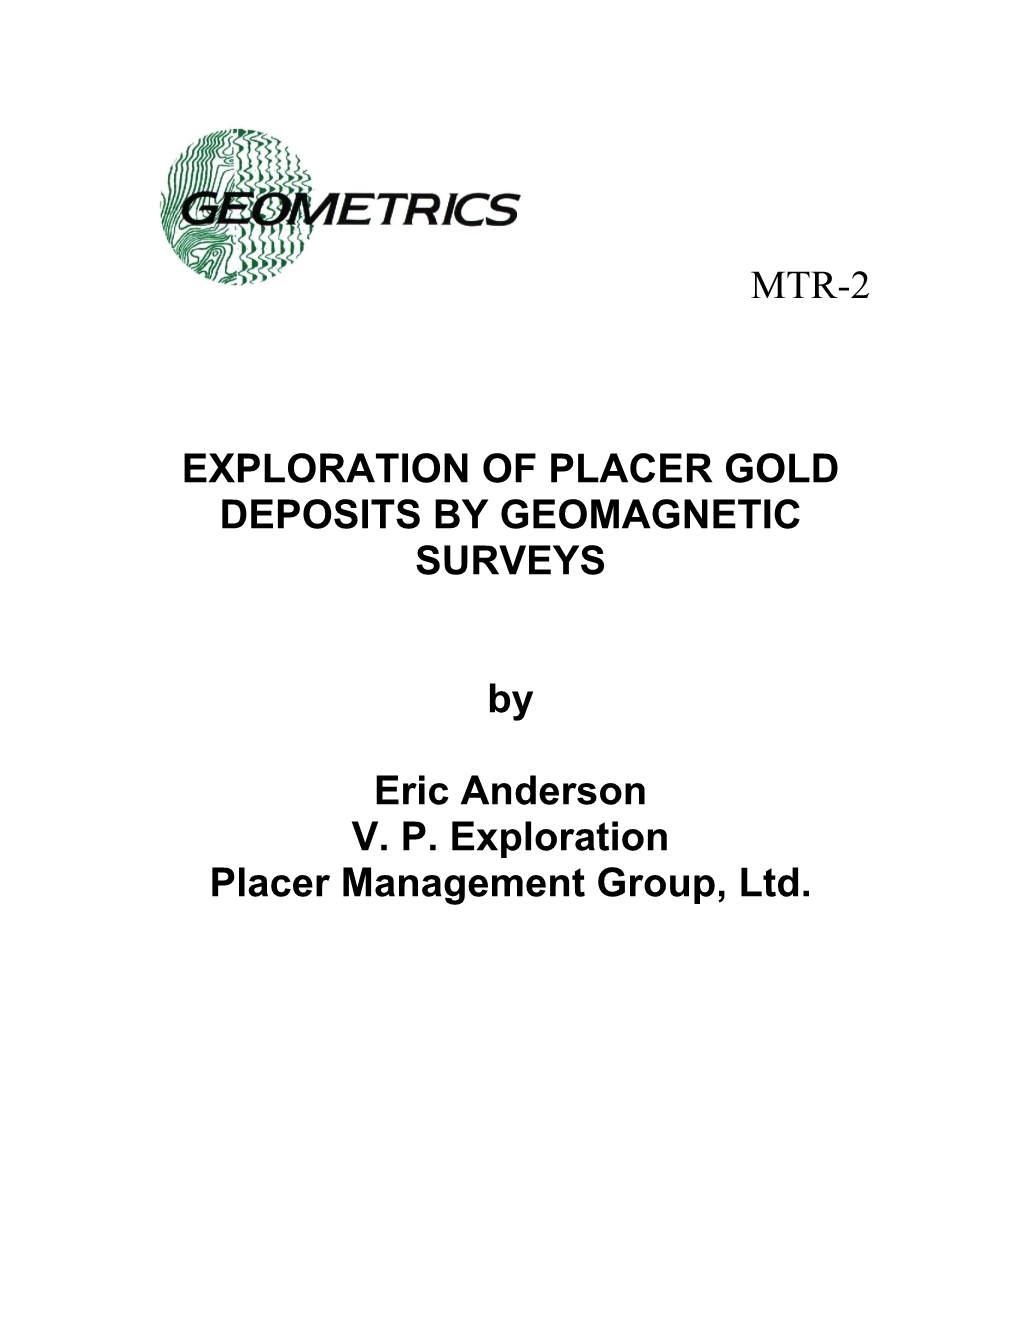 Exploration of Placer Gold Deposits by Geomagnetic Surveys